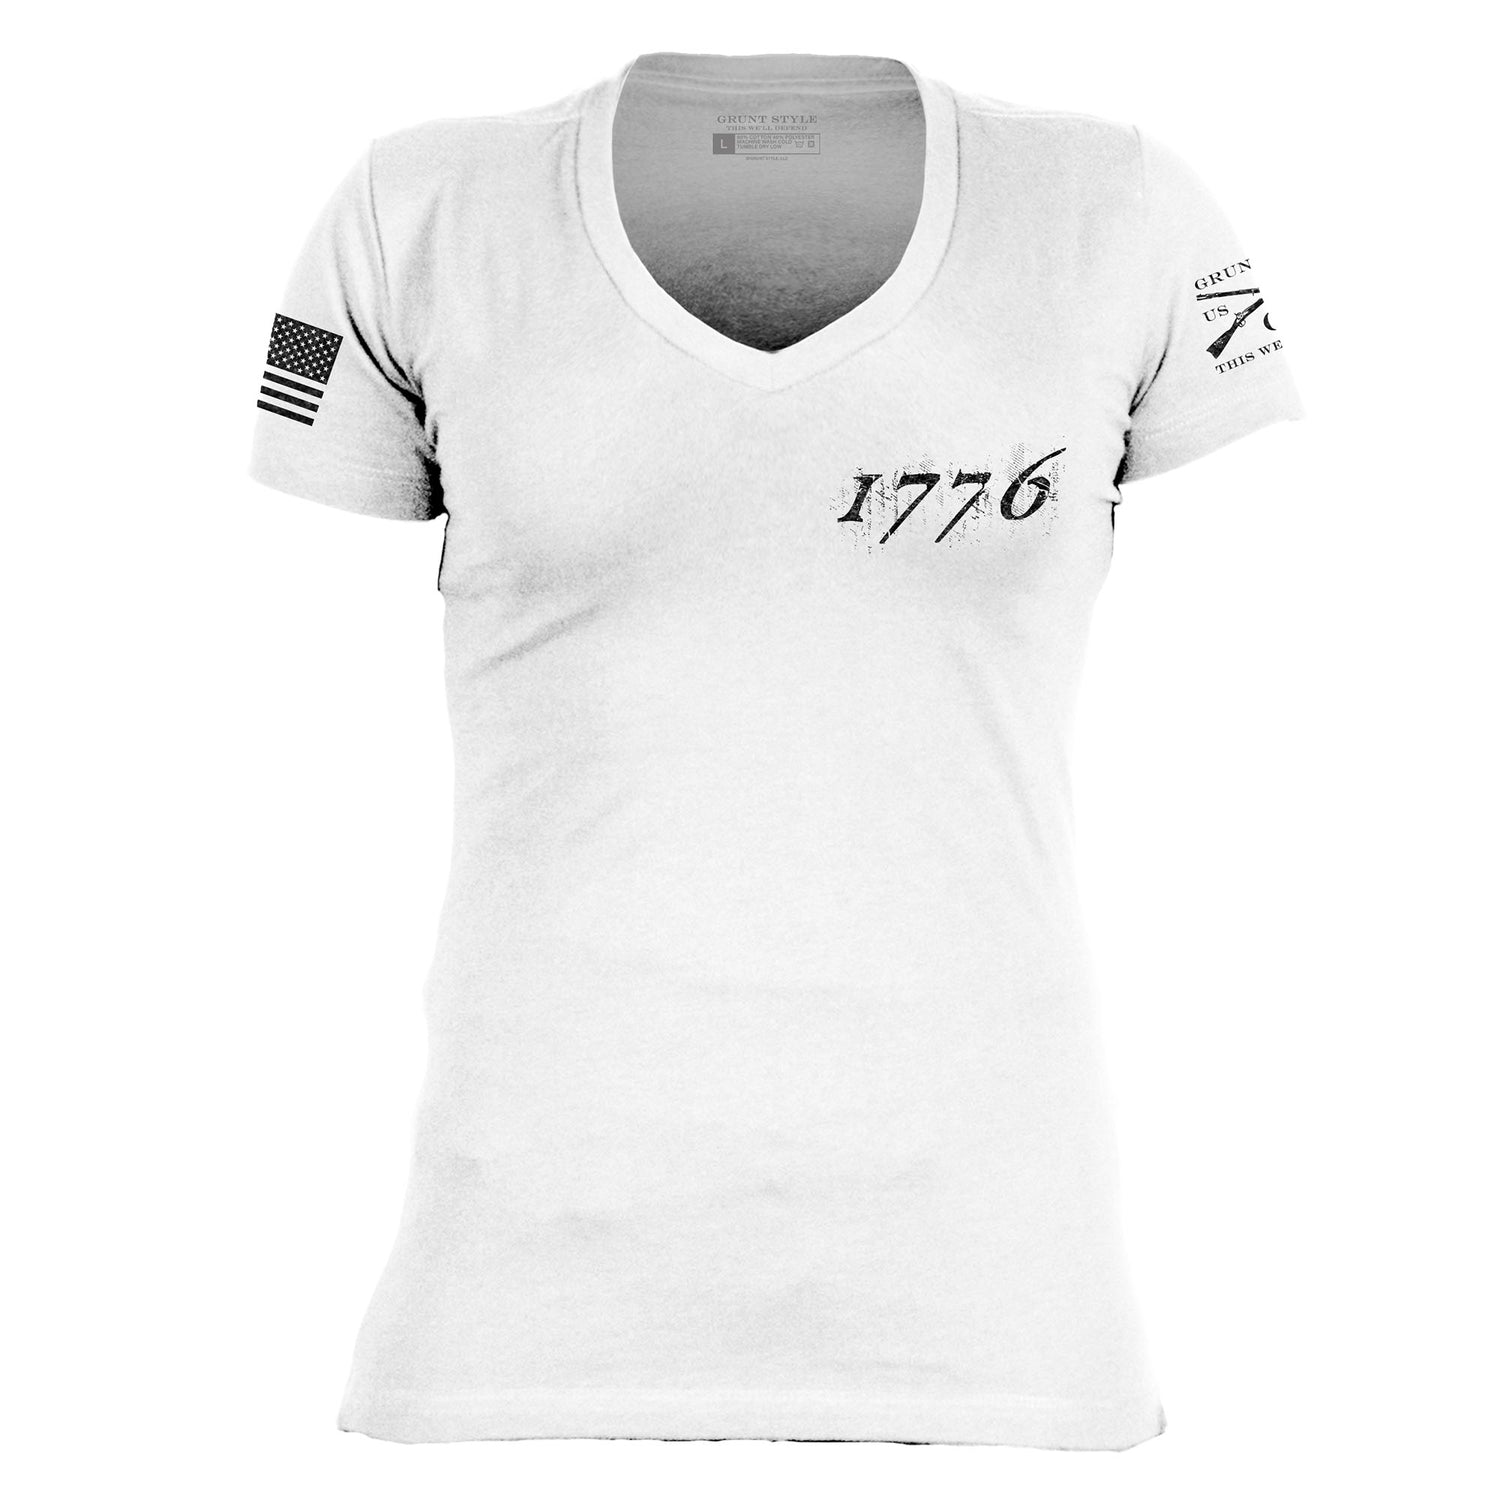 Patriotic Clothing for Women - American Flag Shirt 